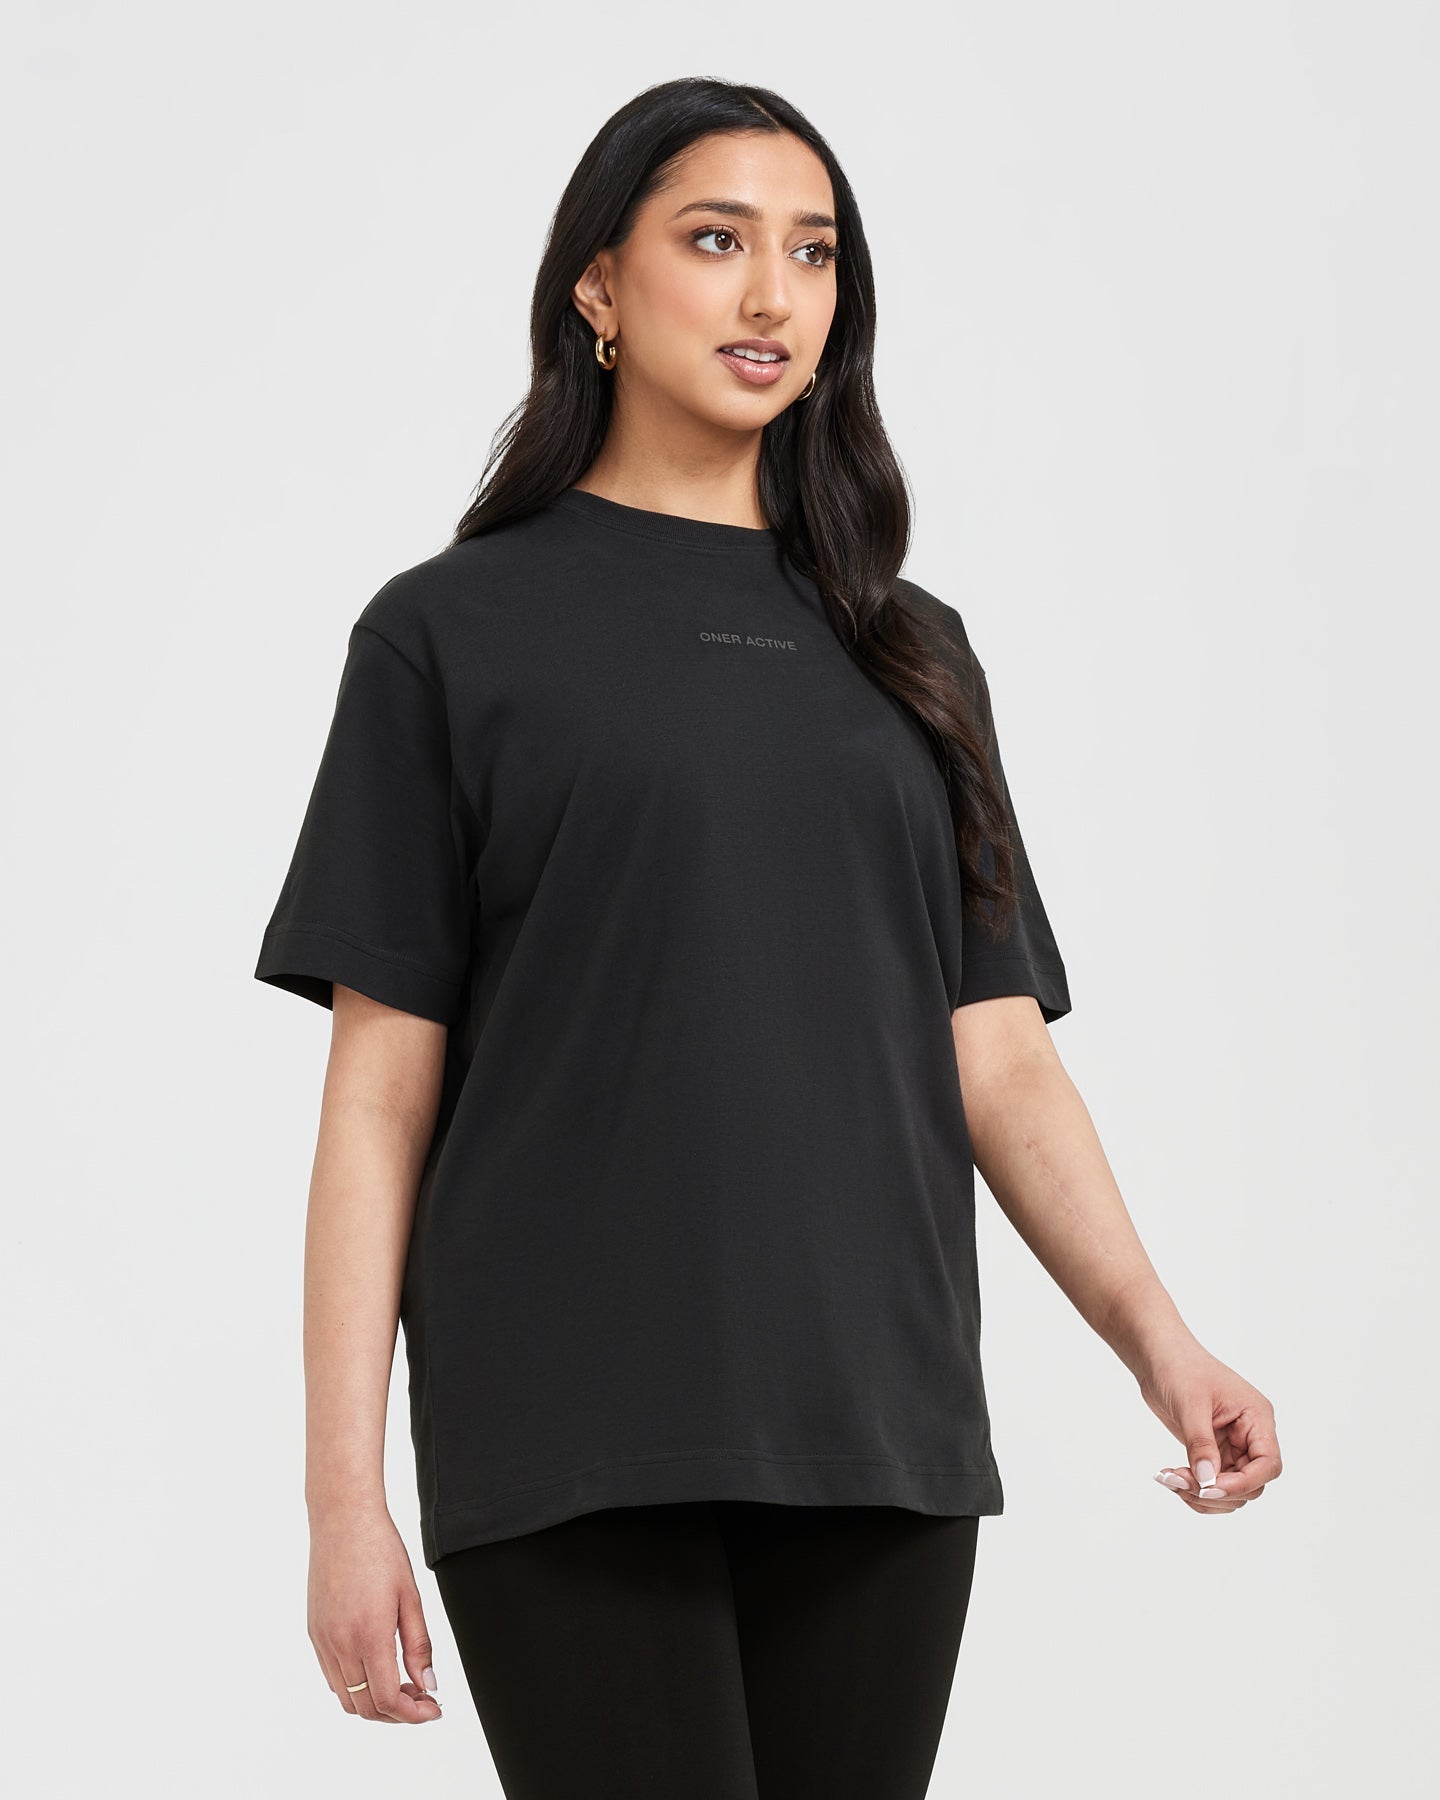 Black Graphic Oversized T-Shirt Women's